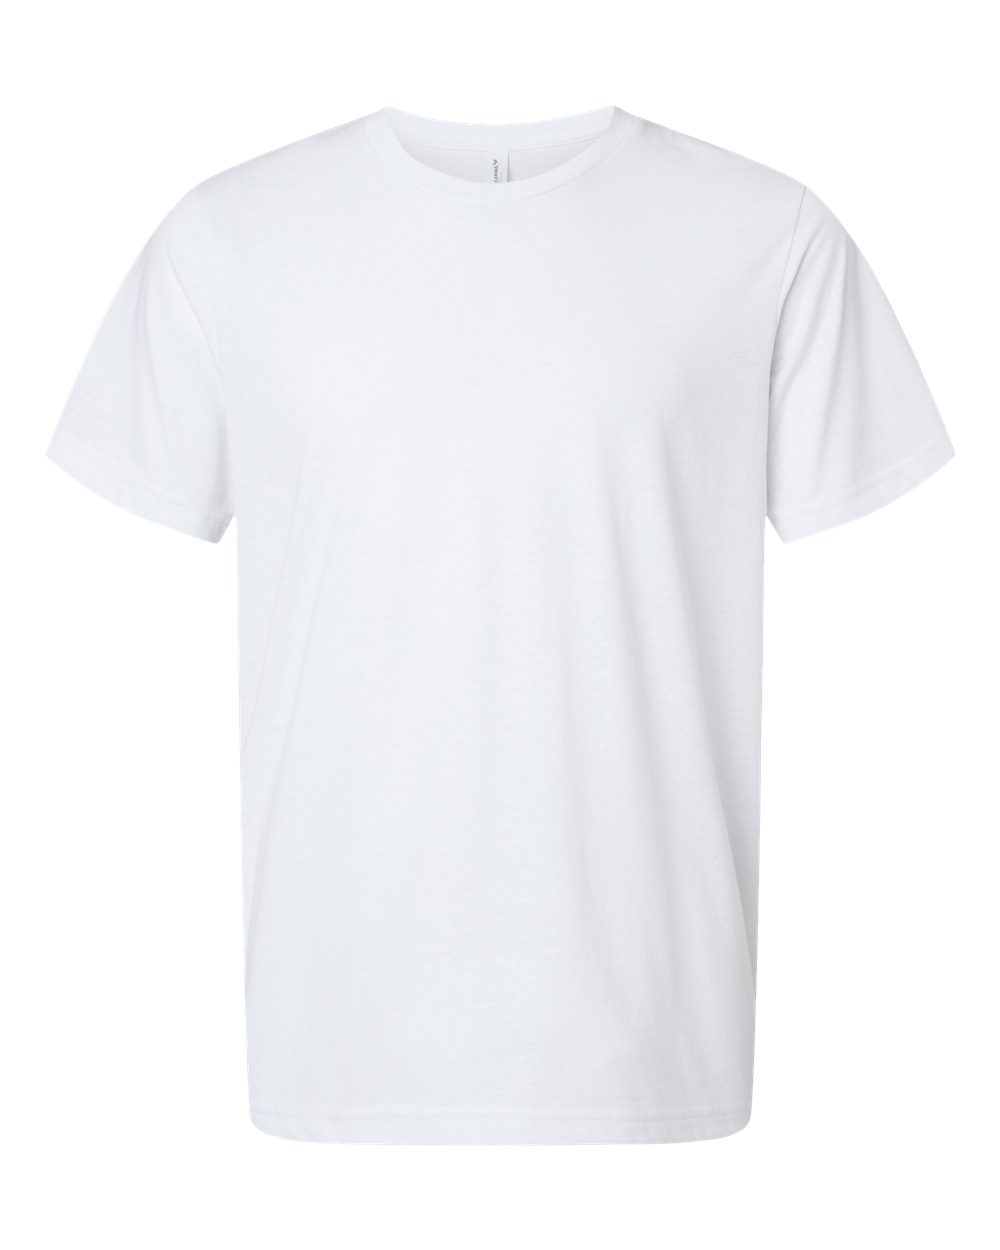 bella+canvas-ap Unisex EcoMax T-Shirt